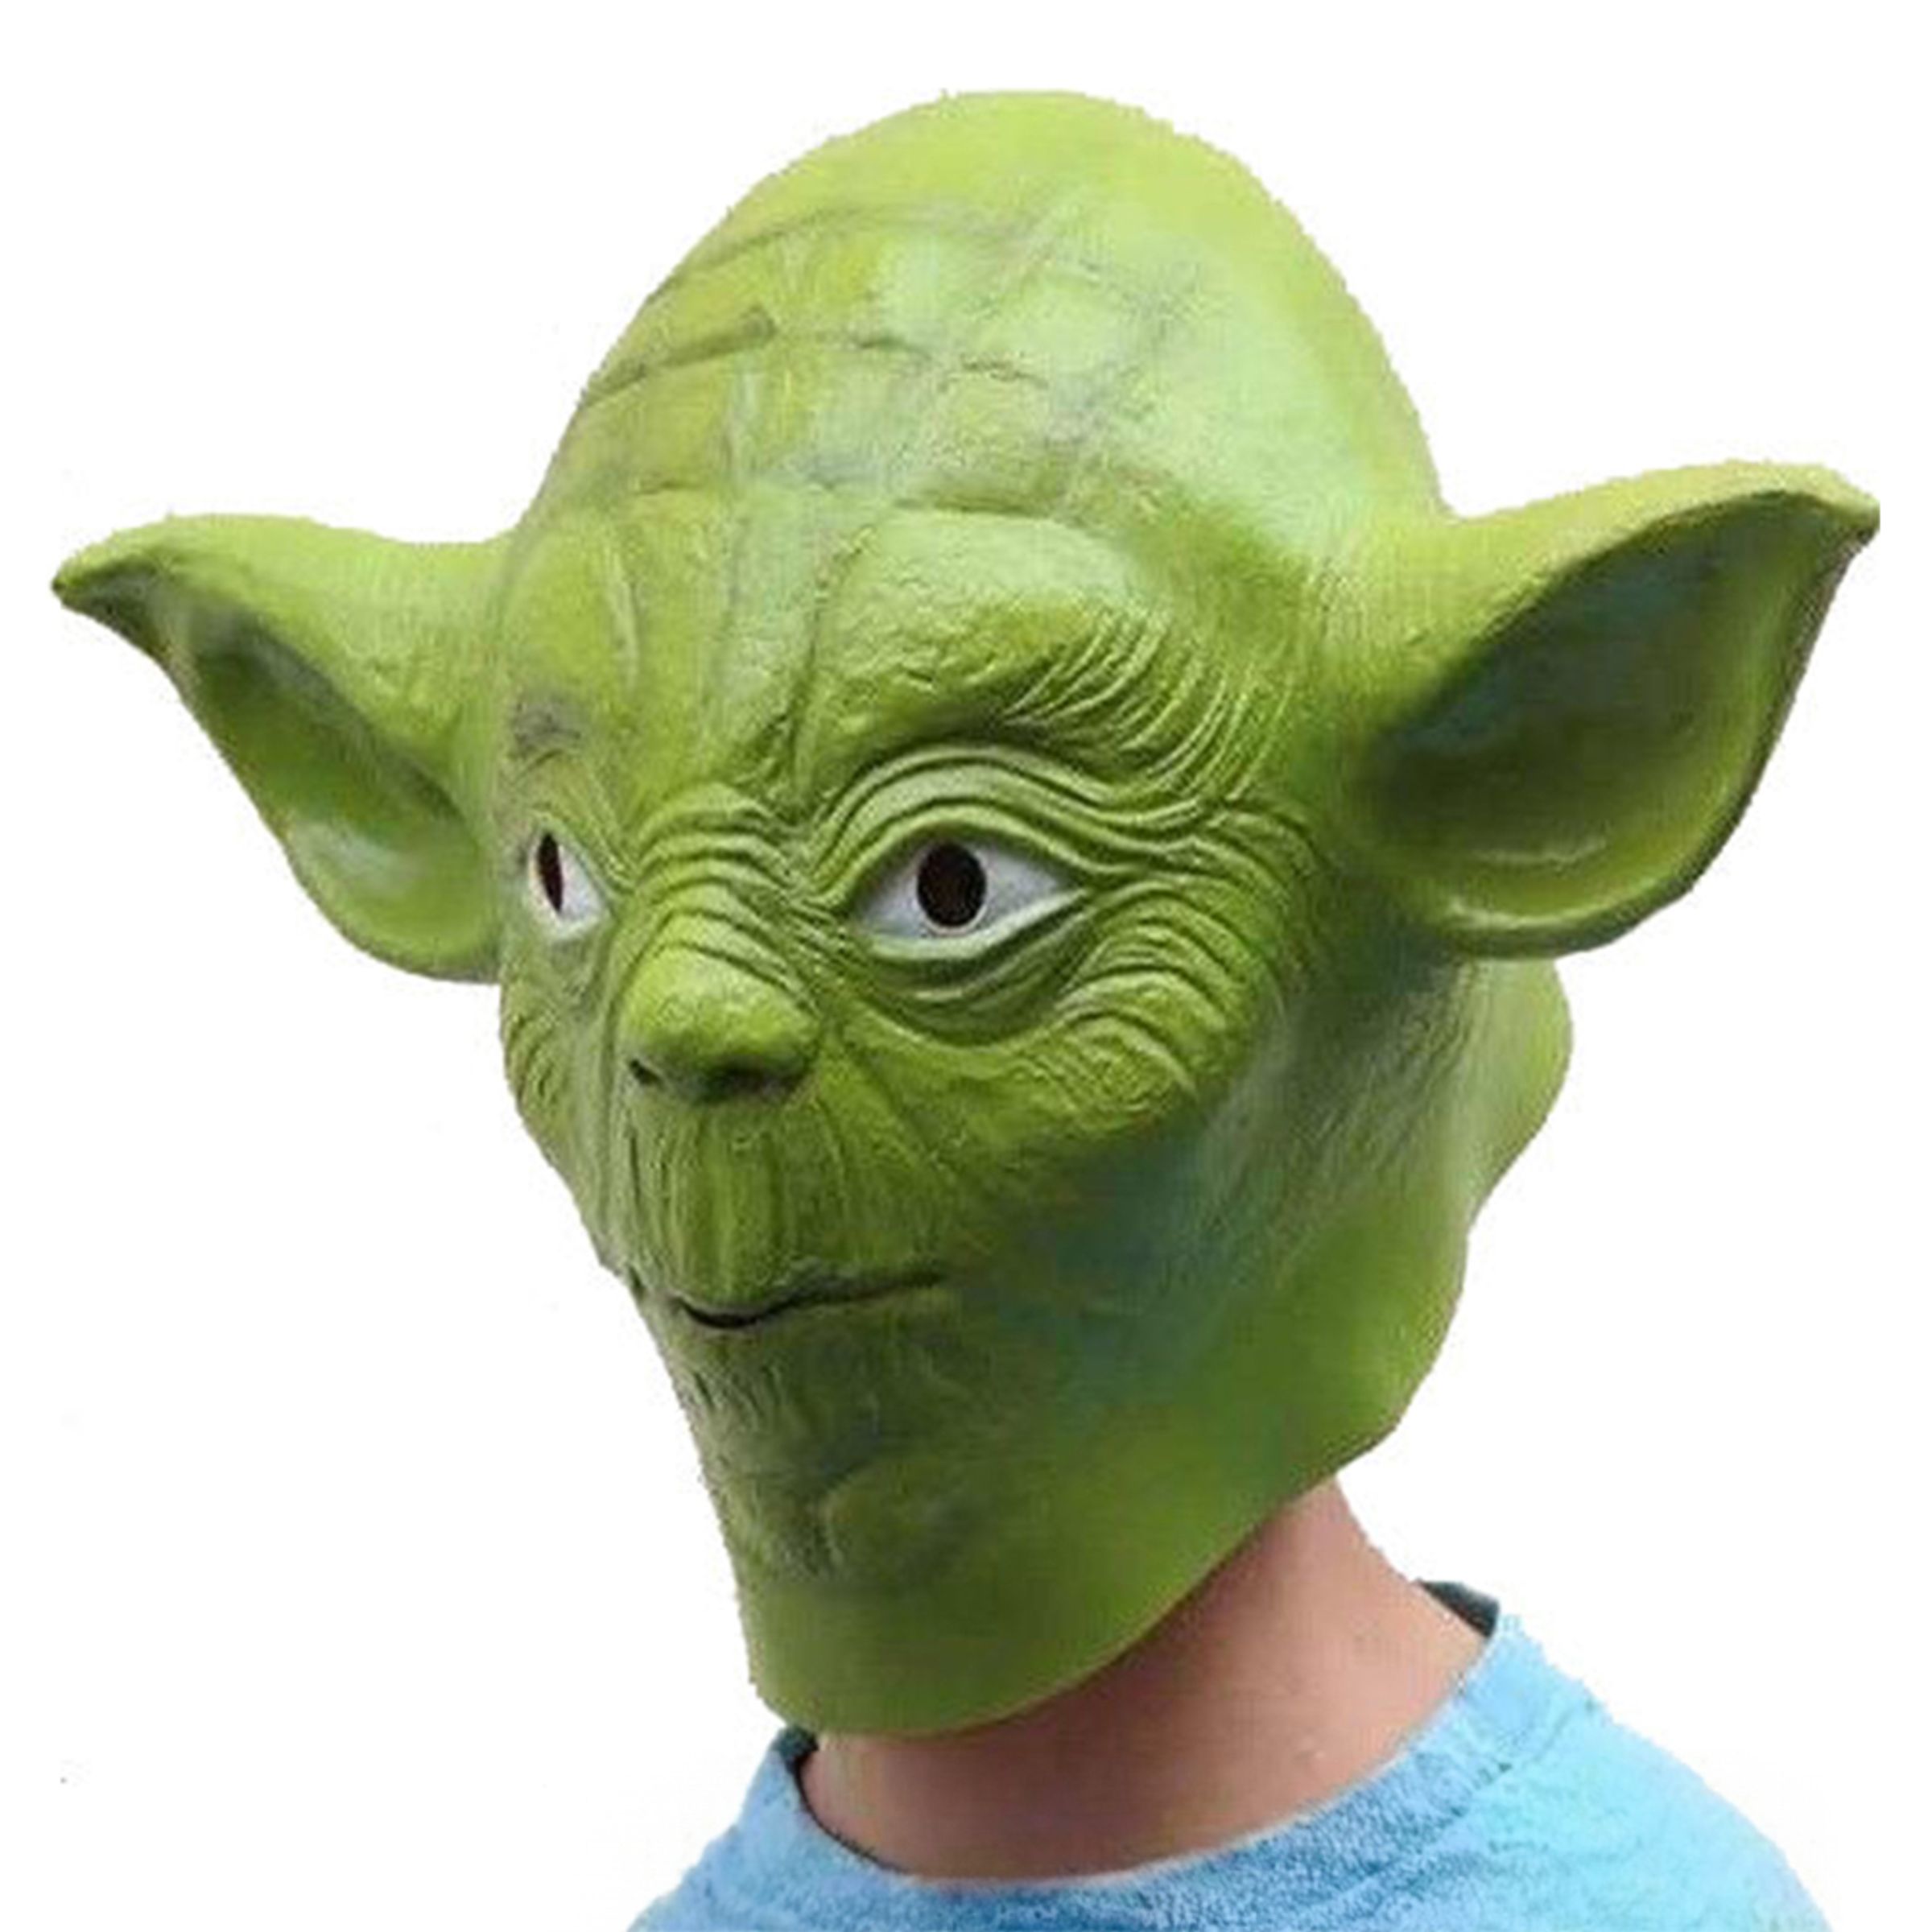 Yoda Mask Latex - One size